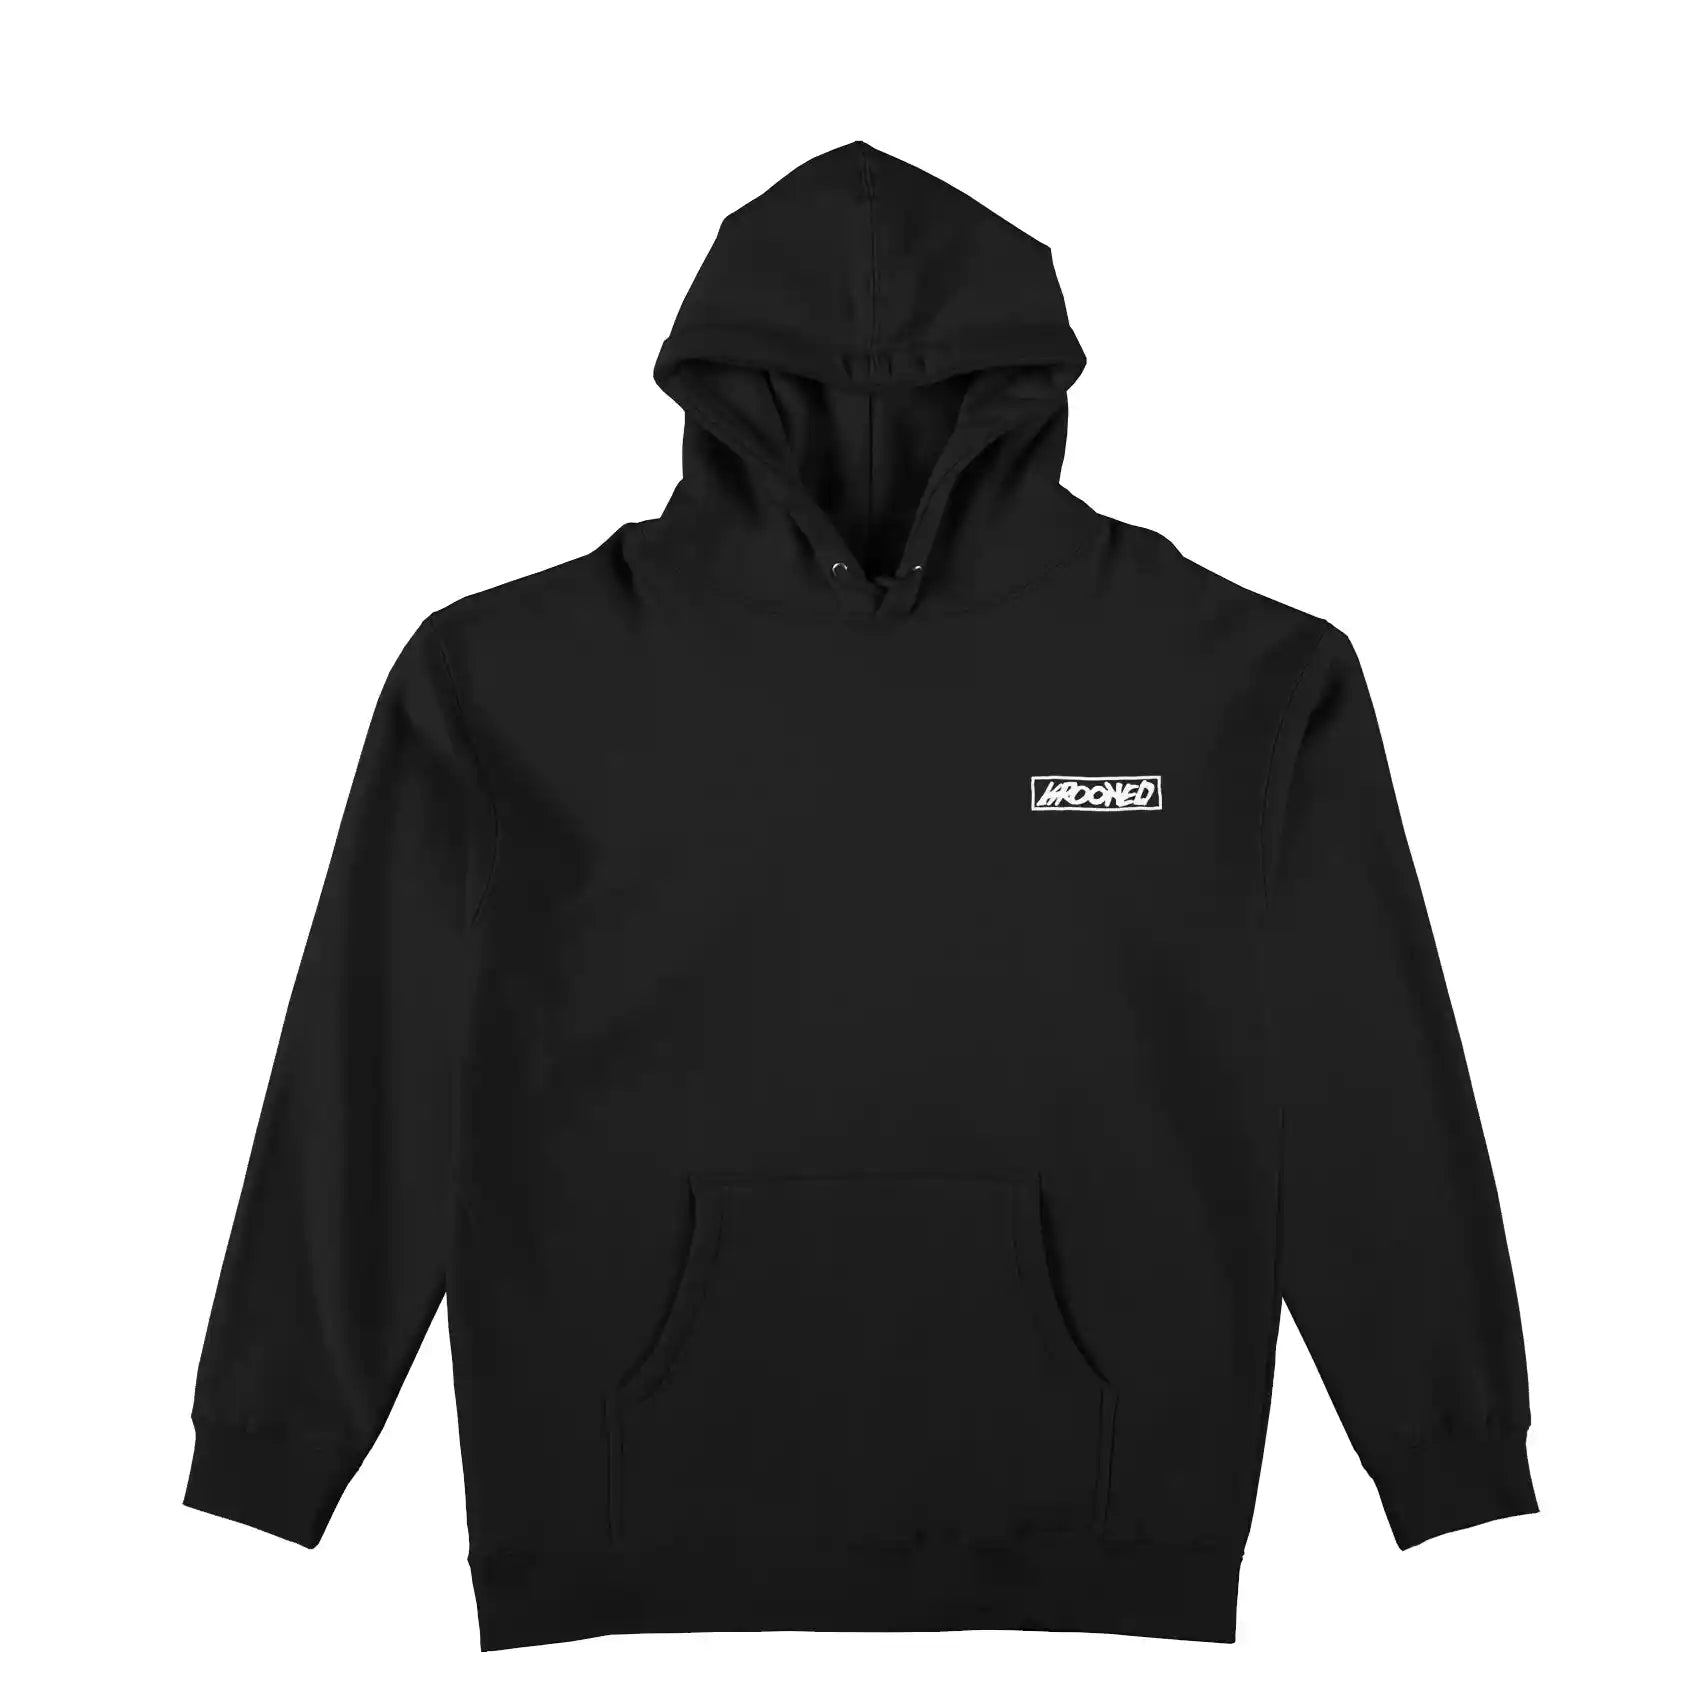 Krooked Mace II Pullover Hooded Sweatshirt, black w/ white prints - Tiki Room Skateboards - 2